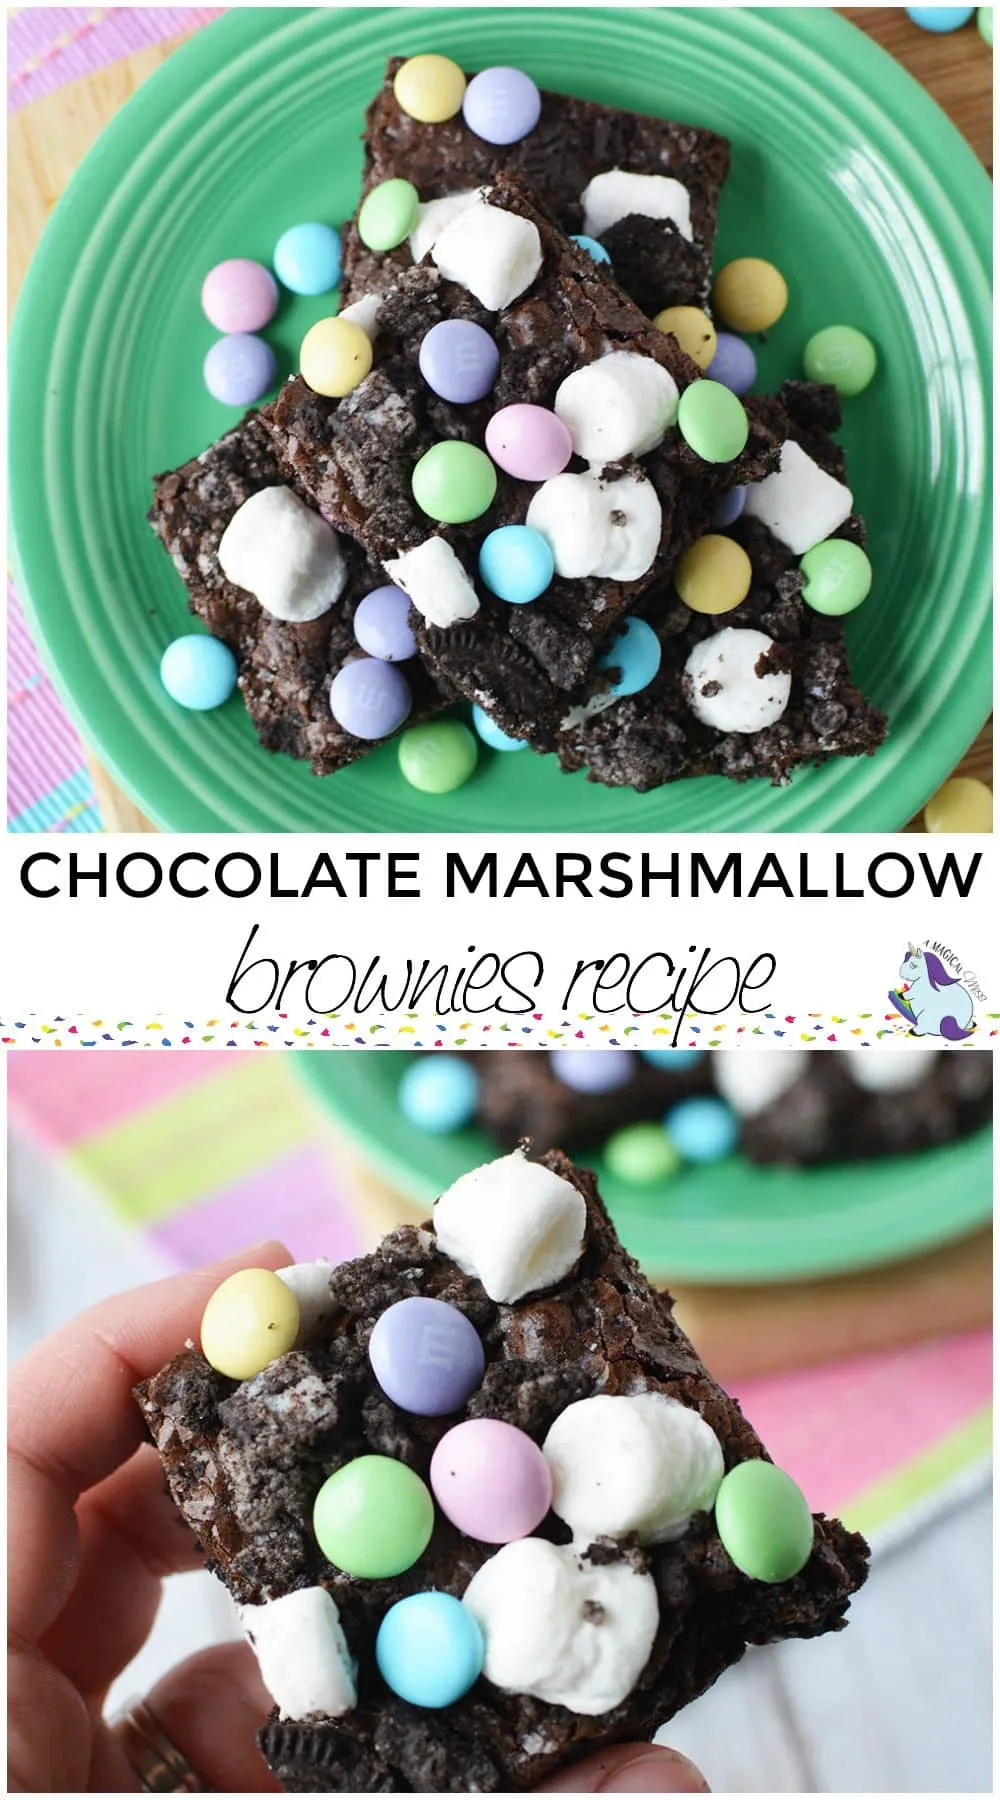 chocolate marshmallow brownies recipe in process